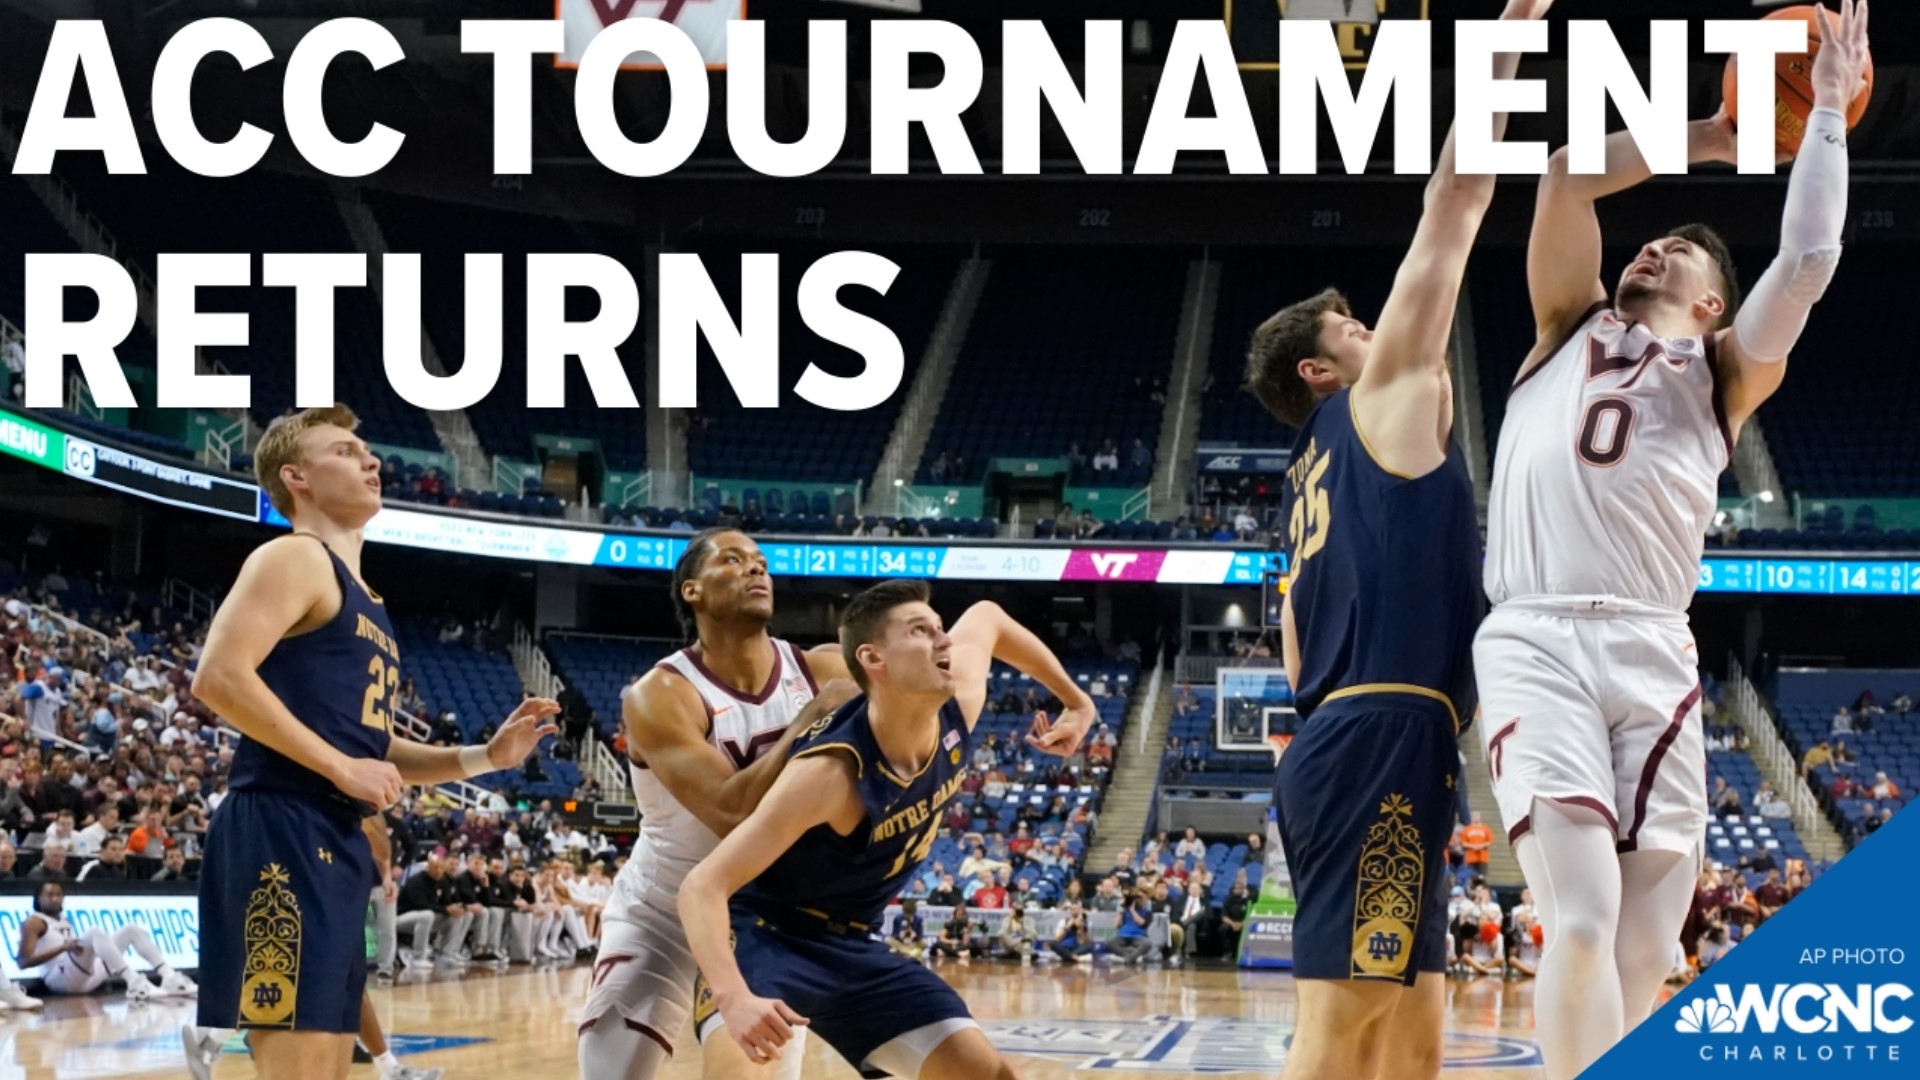 ACC Tournament returns to Greensboro, NC wcnc